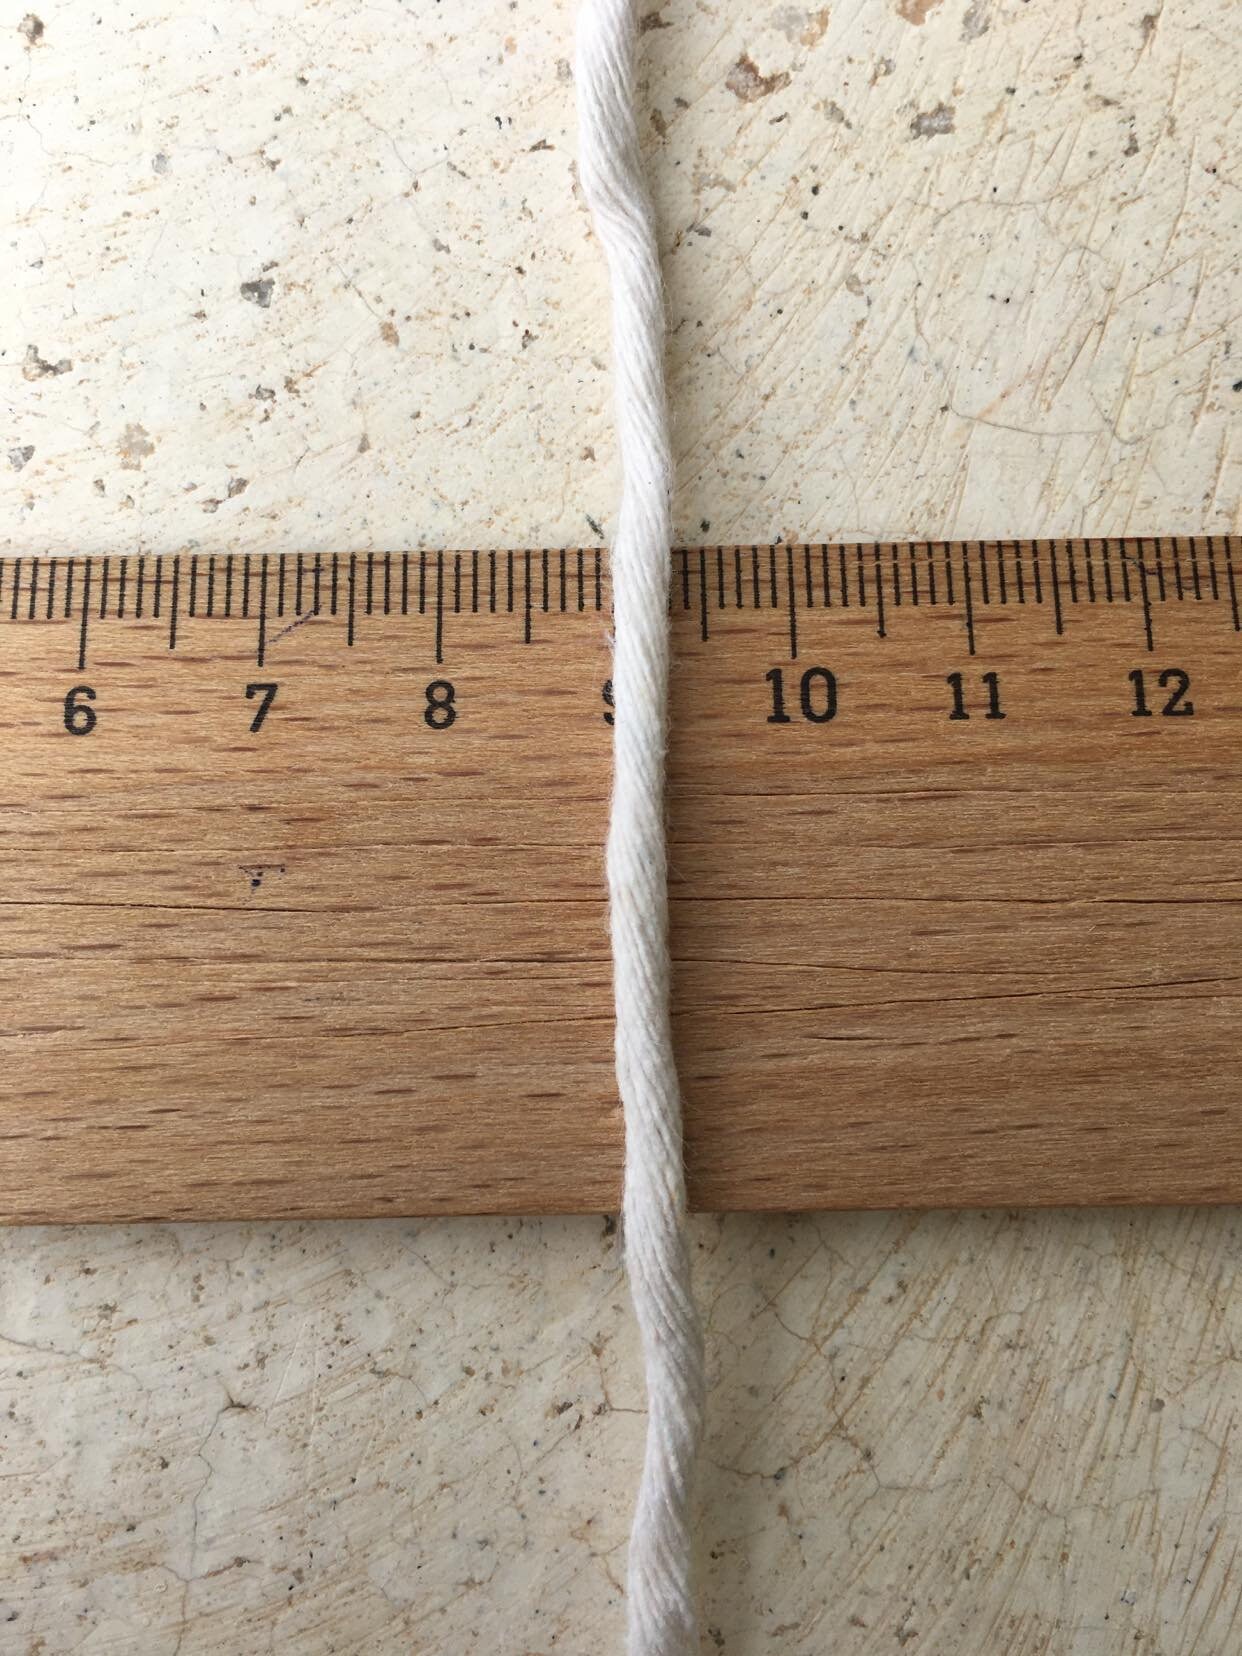 2mm Macrame String/6-pack Bulk String/colouful Warp Thread/cotton